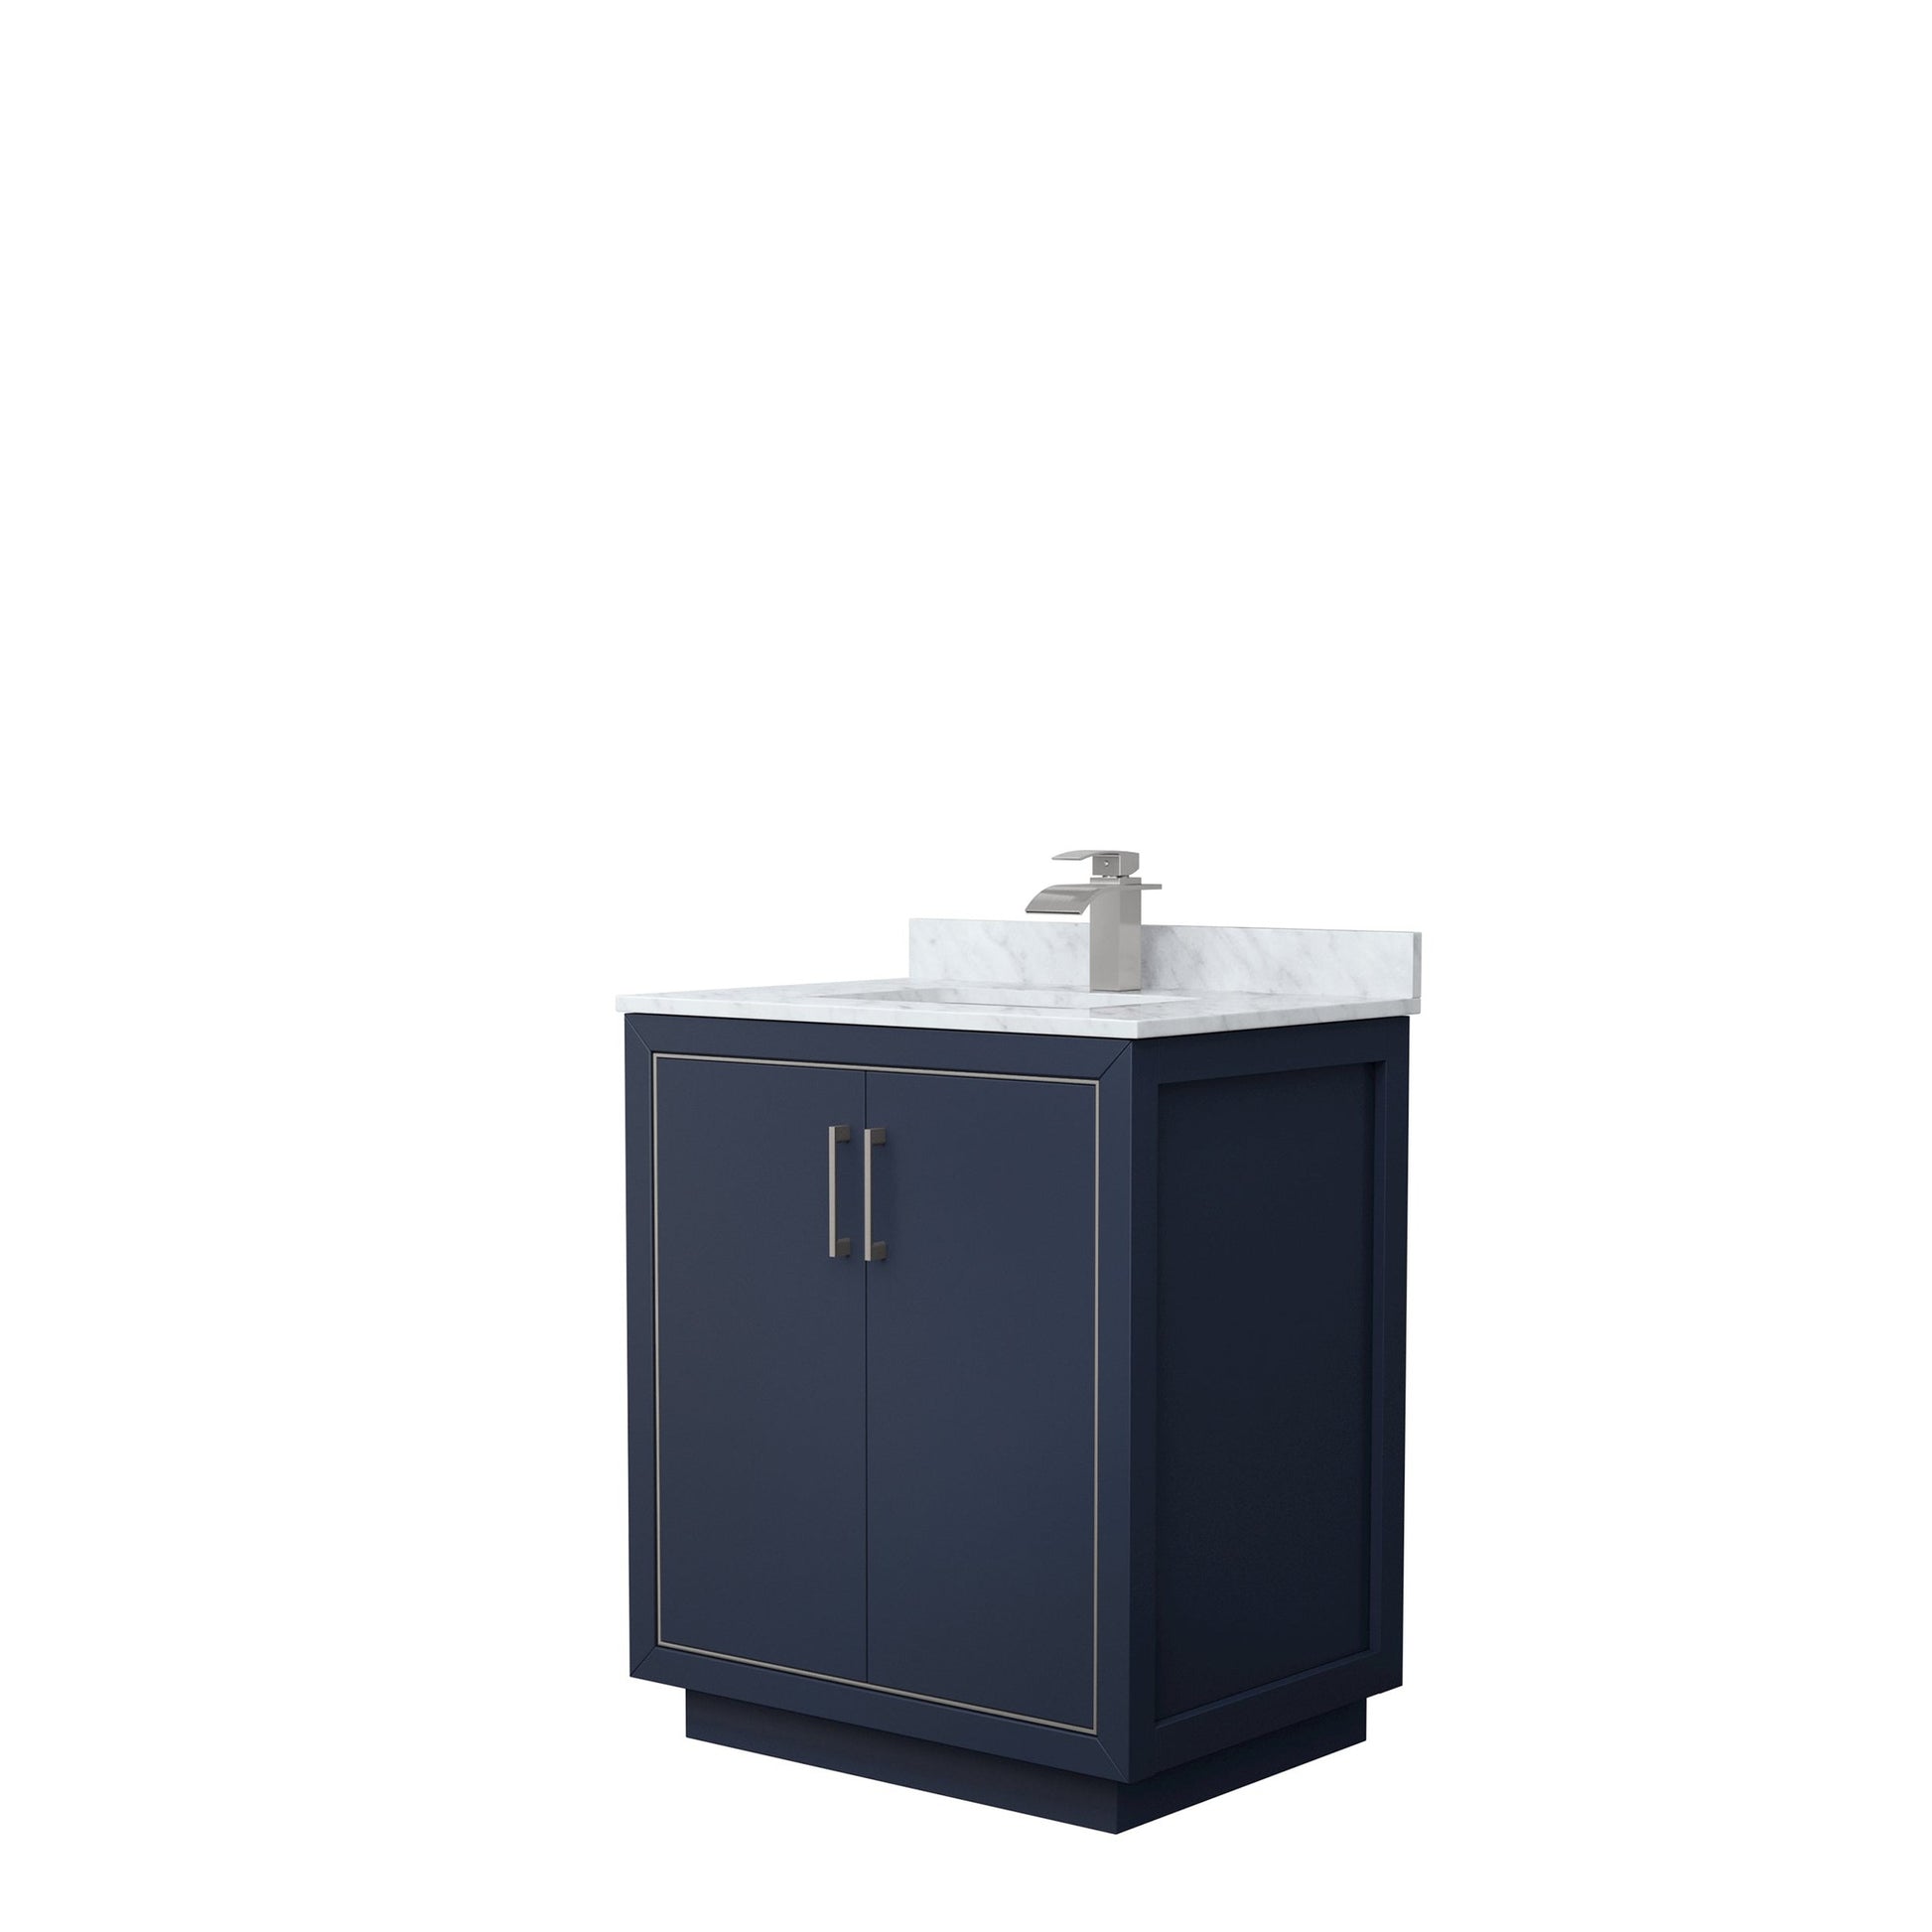 Wyndham Collection Icon 30" Single Bathroom Vanity in Dark Blue, White Carrara Marble Countertop, Undermount Square Sink, Brushed Nickel Trim